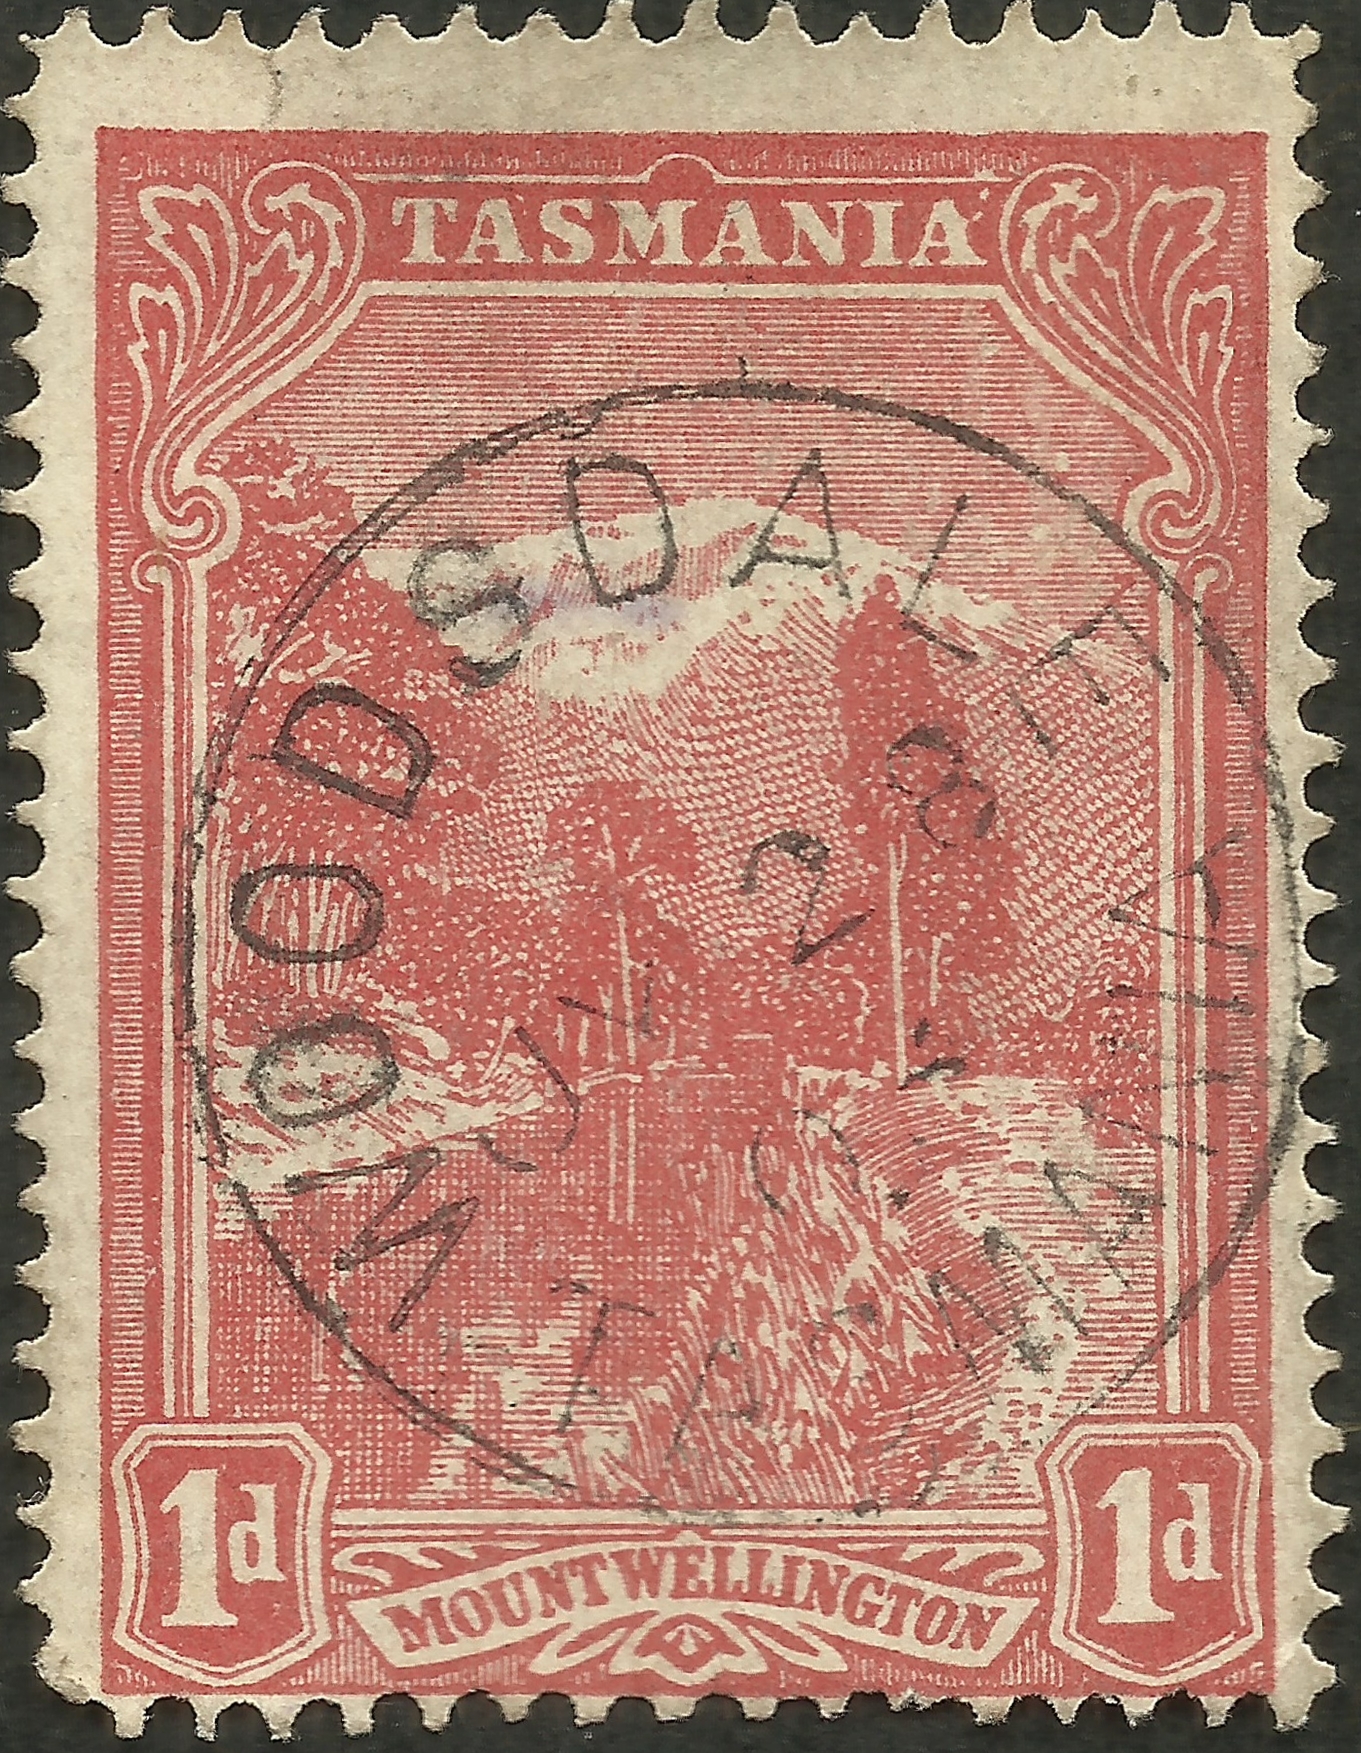 Tasmania - Scott #96 (1902)